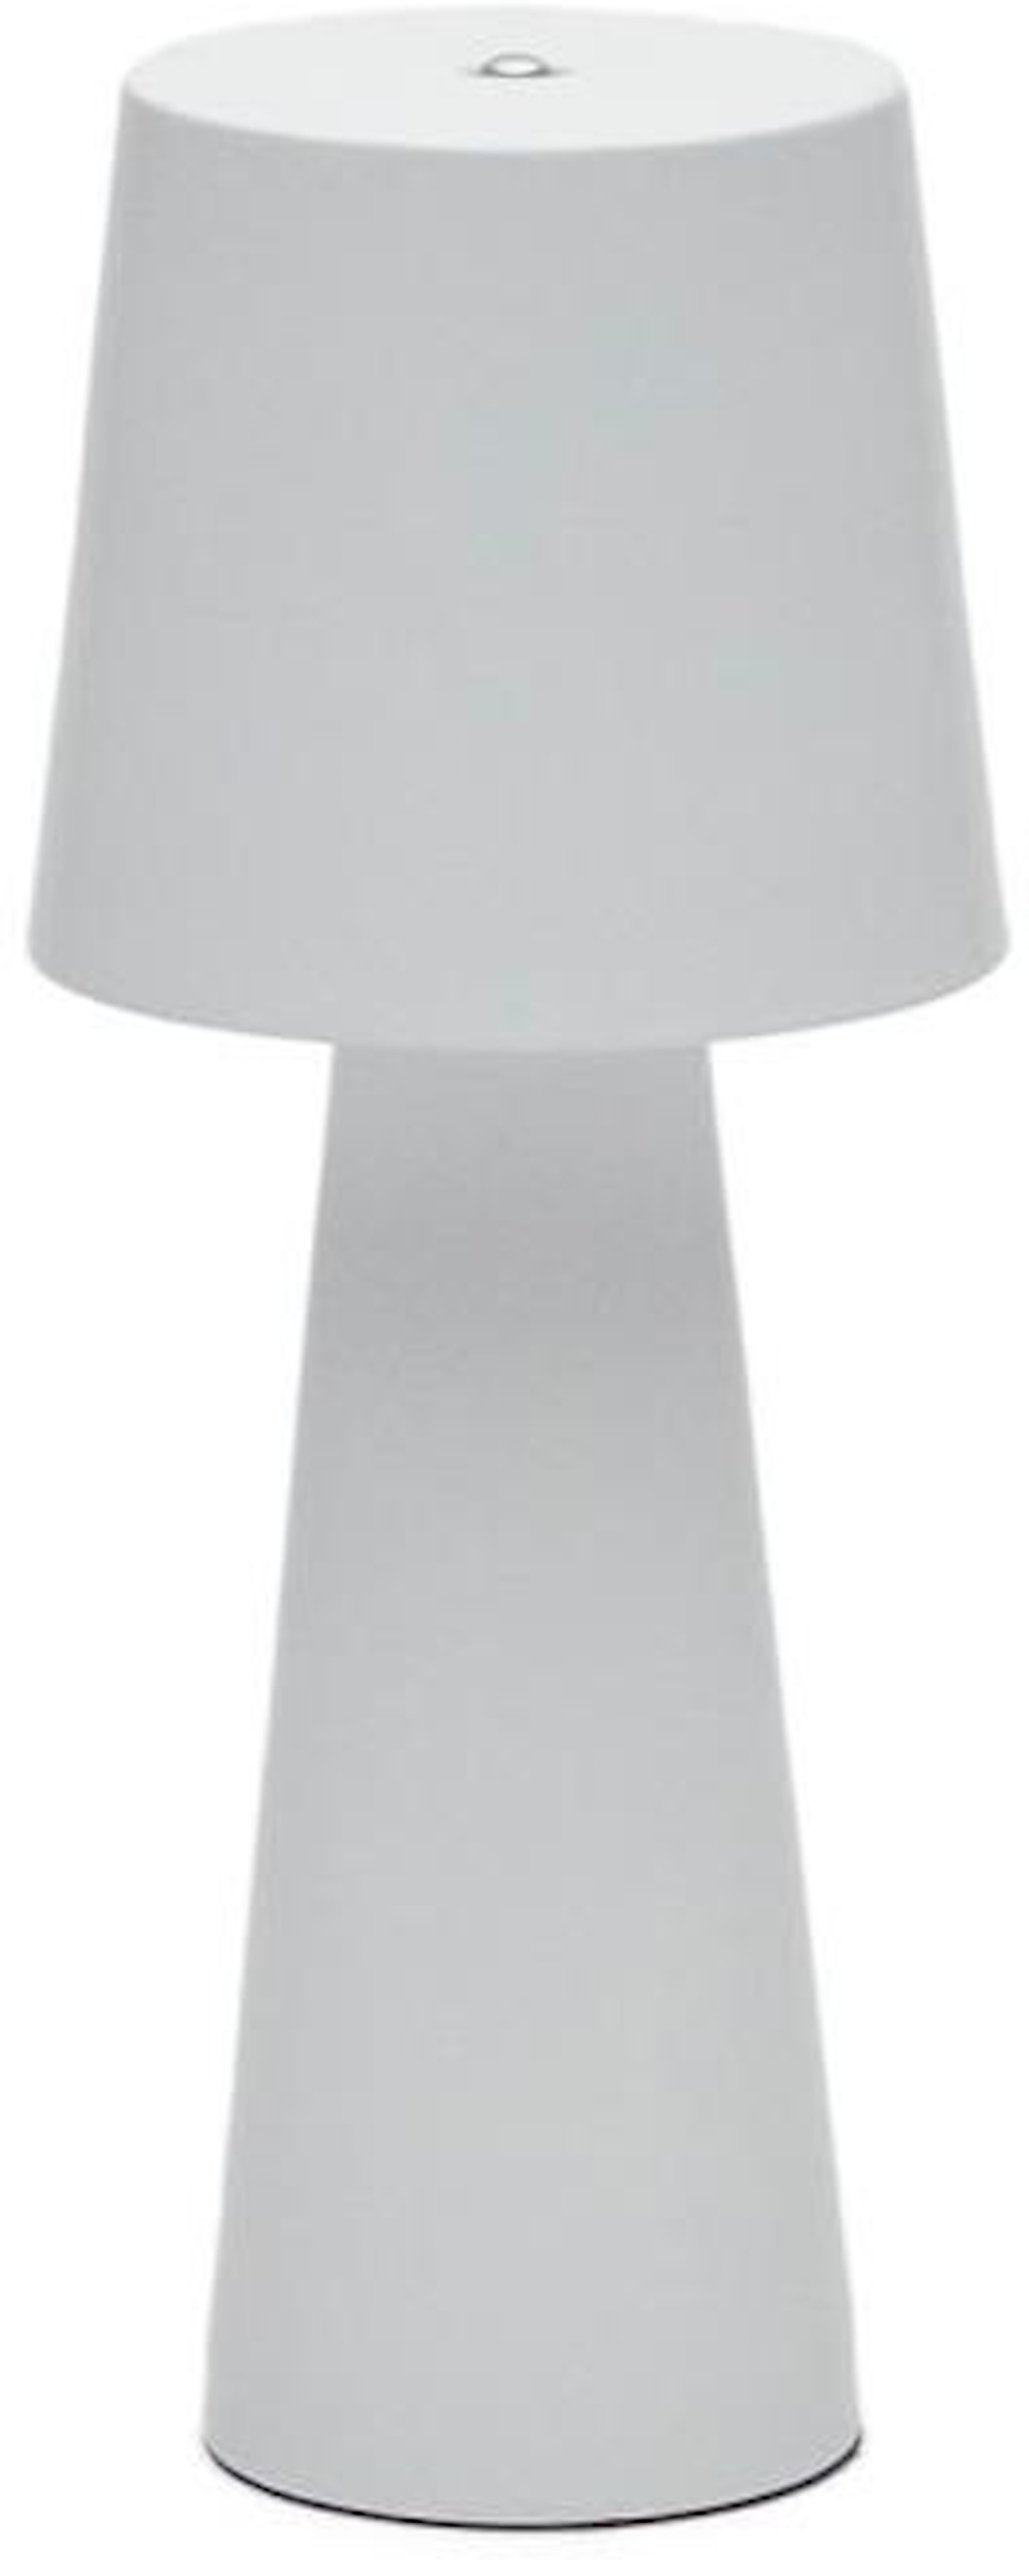 Arenys, Bordlampe, moderne, nordisk, metal by Laforma (H: 25 cm. x B: 10 cm. x L: 10 cm., Hvid)